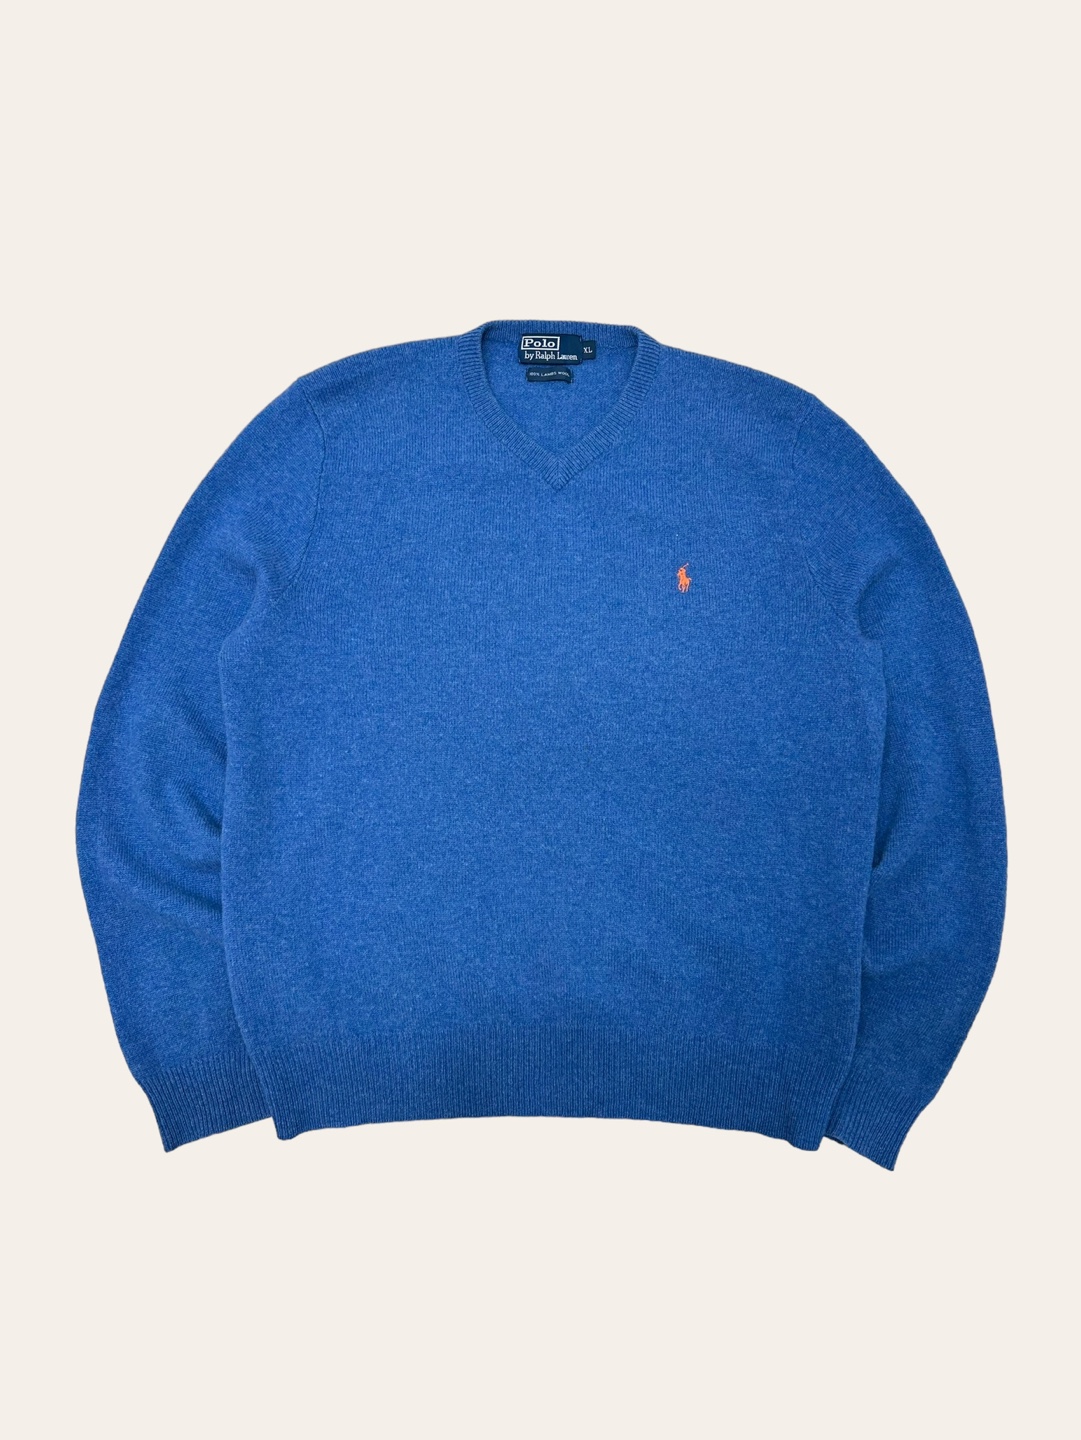 Polo ralph lauren blue lambswool v-neck sweater XL